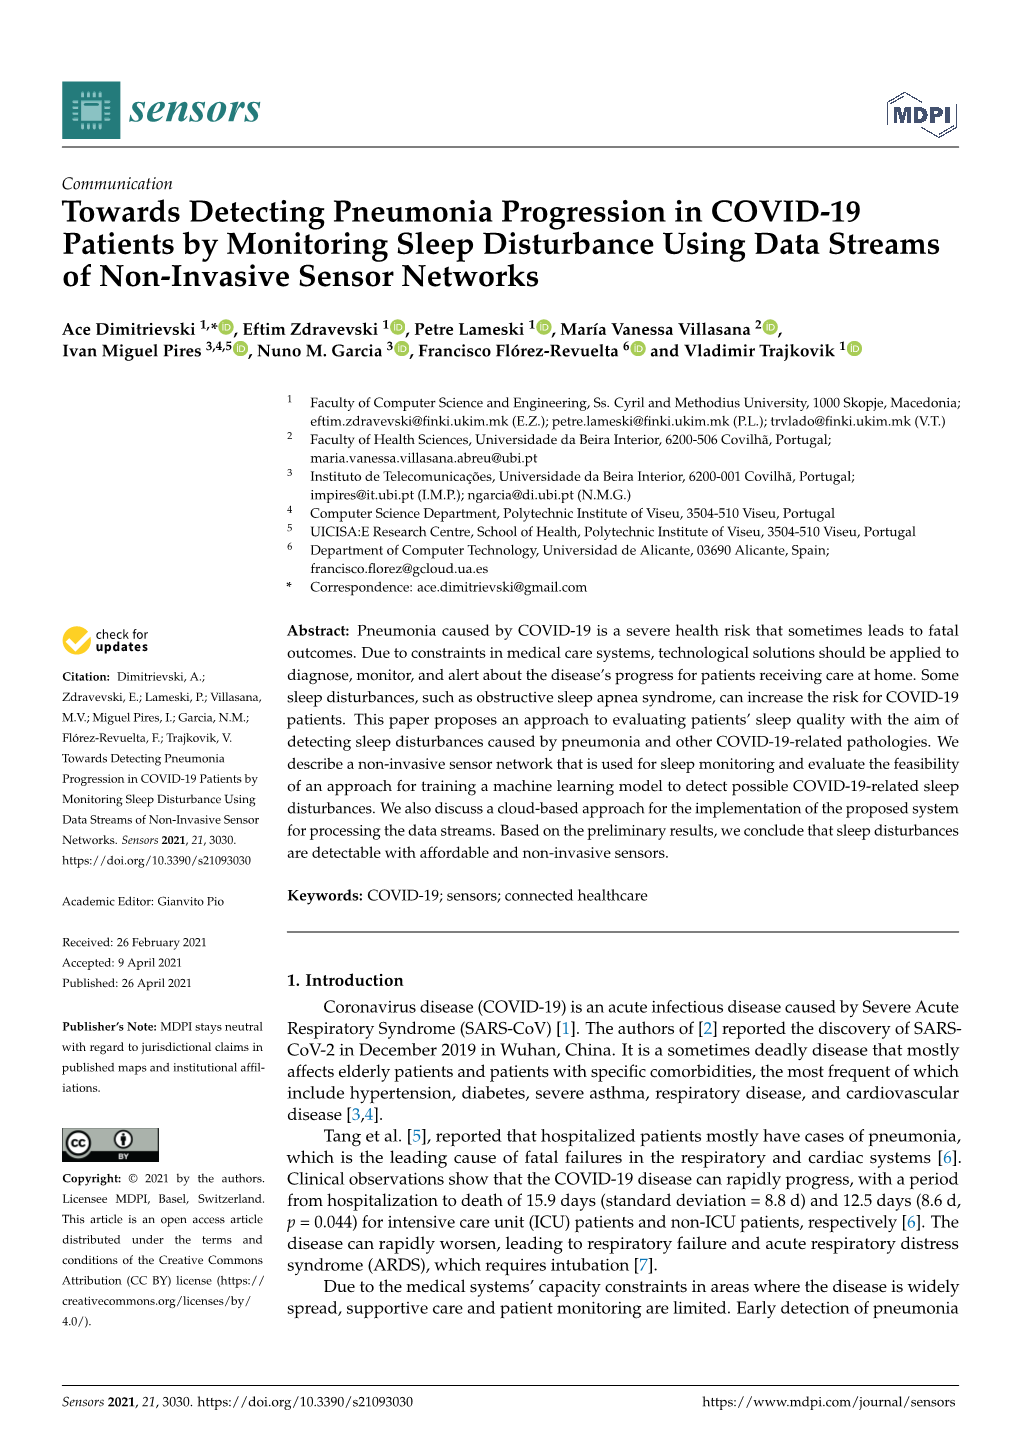 Towards Detecting Pneumonia Progression in COVID-19 Patients by Monitoring Sleep Disturbance Using Data Streams of Non-Invasive Sensor Networks